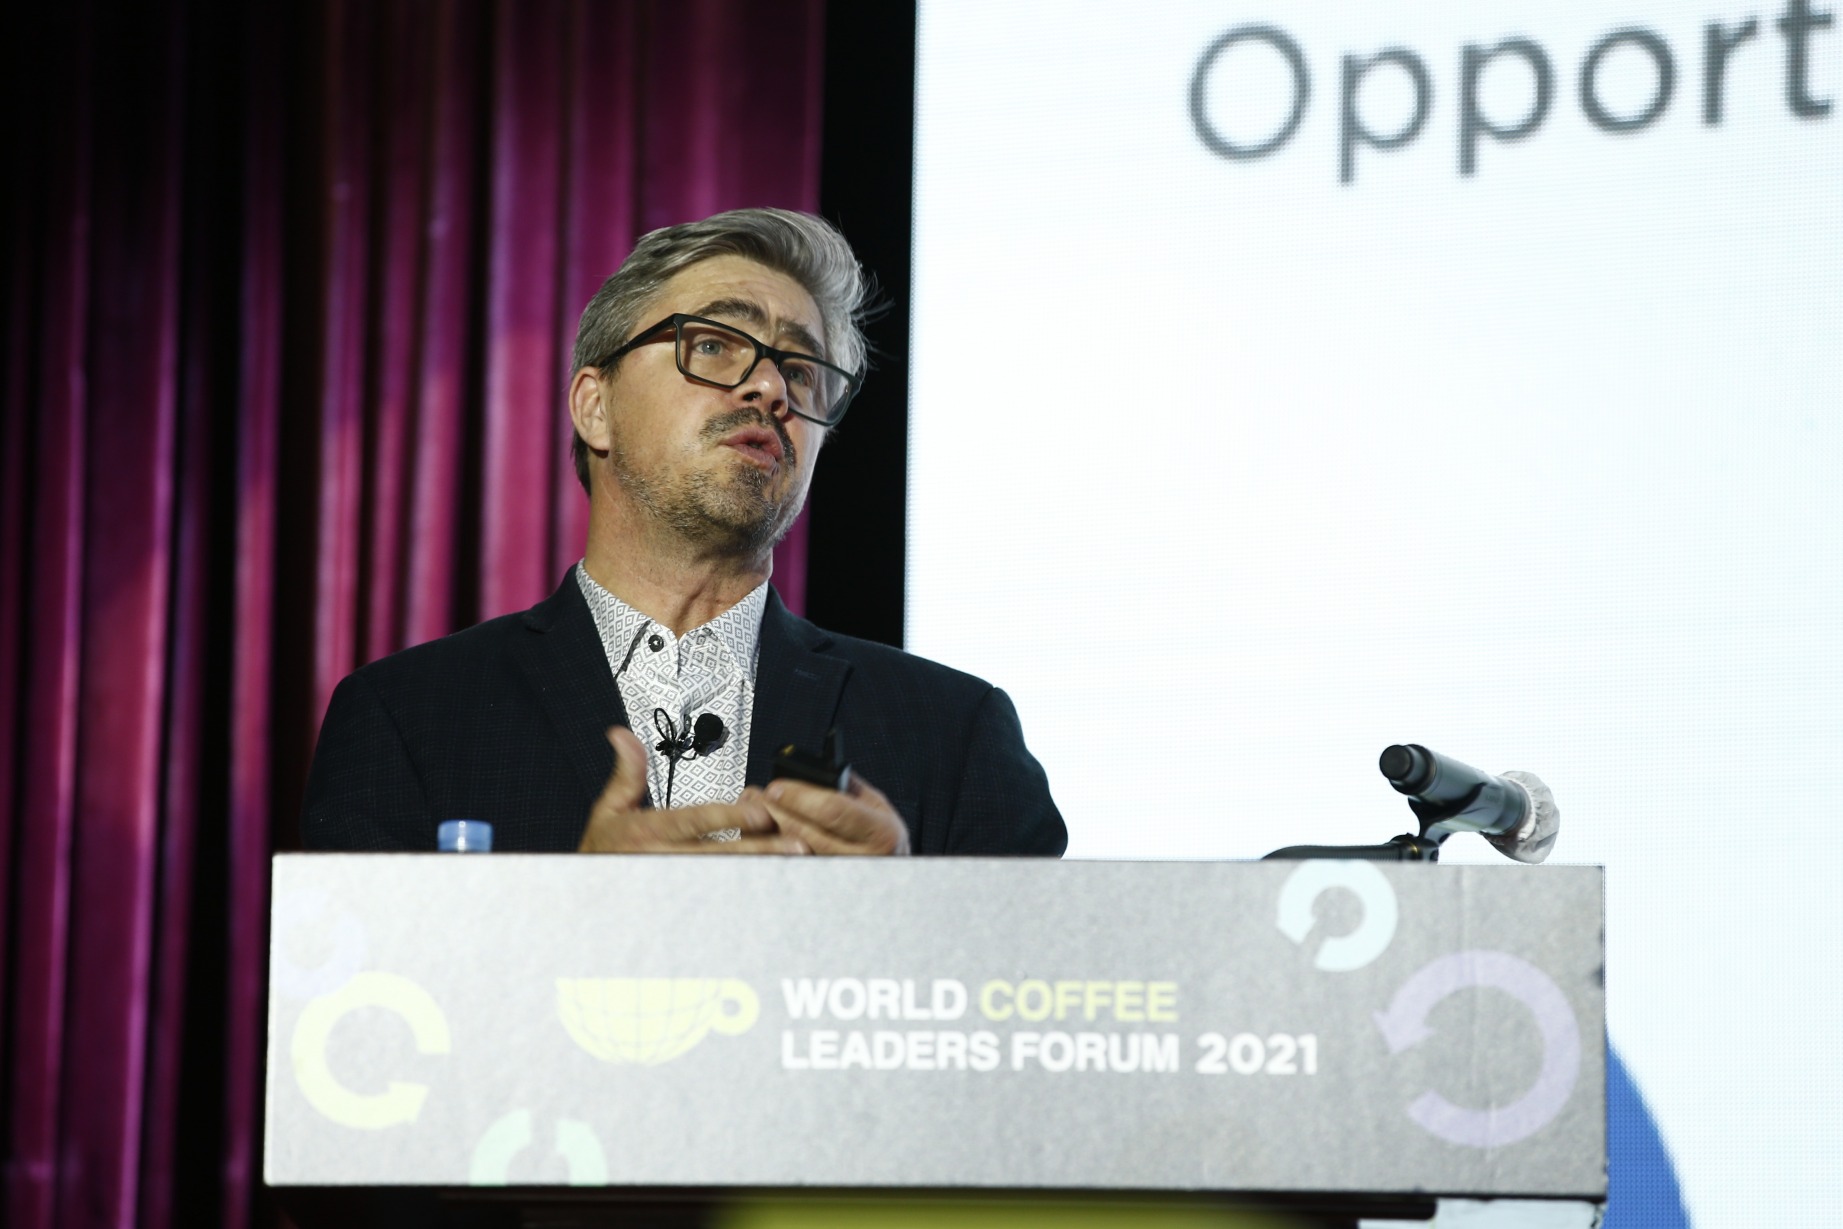 World Coffee Leaders Forum 2022, The 11th World Coffee Leaders Forum 2022